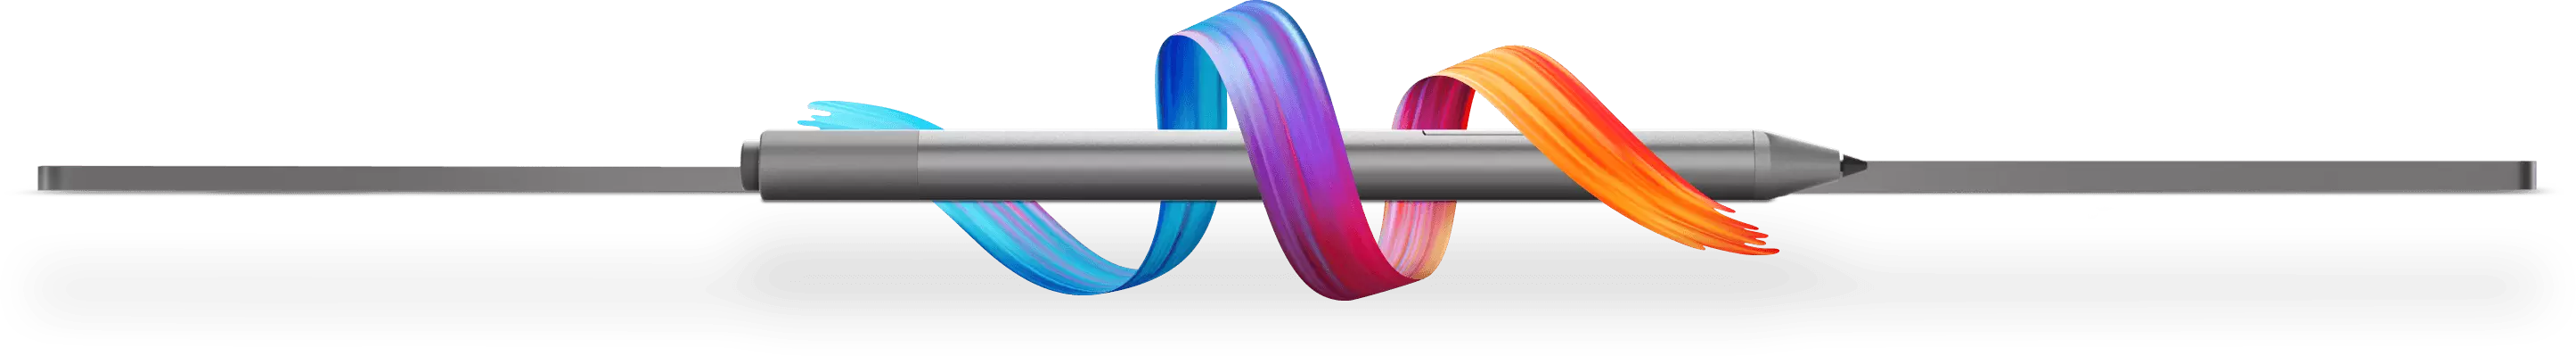 Lenovo Yoga Pen Wrapped in Colorful Ribbon